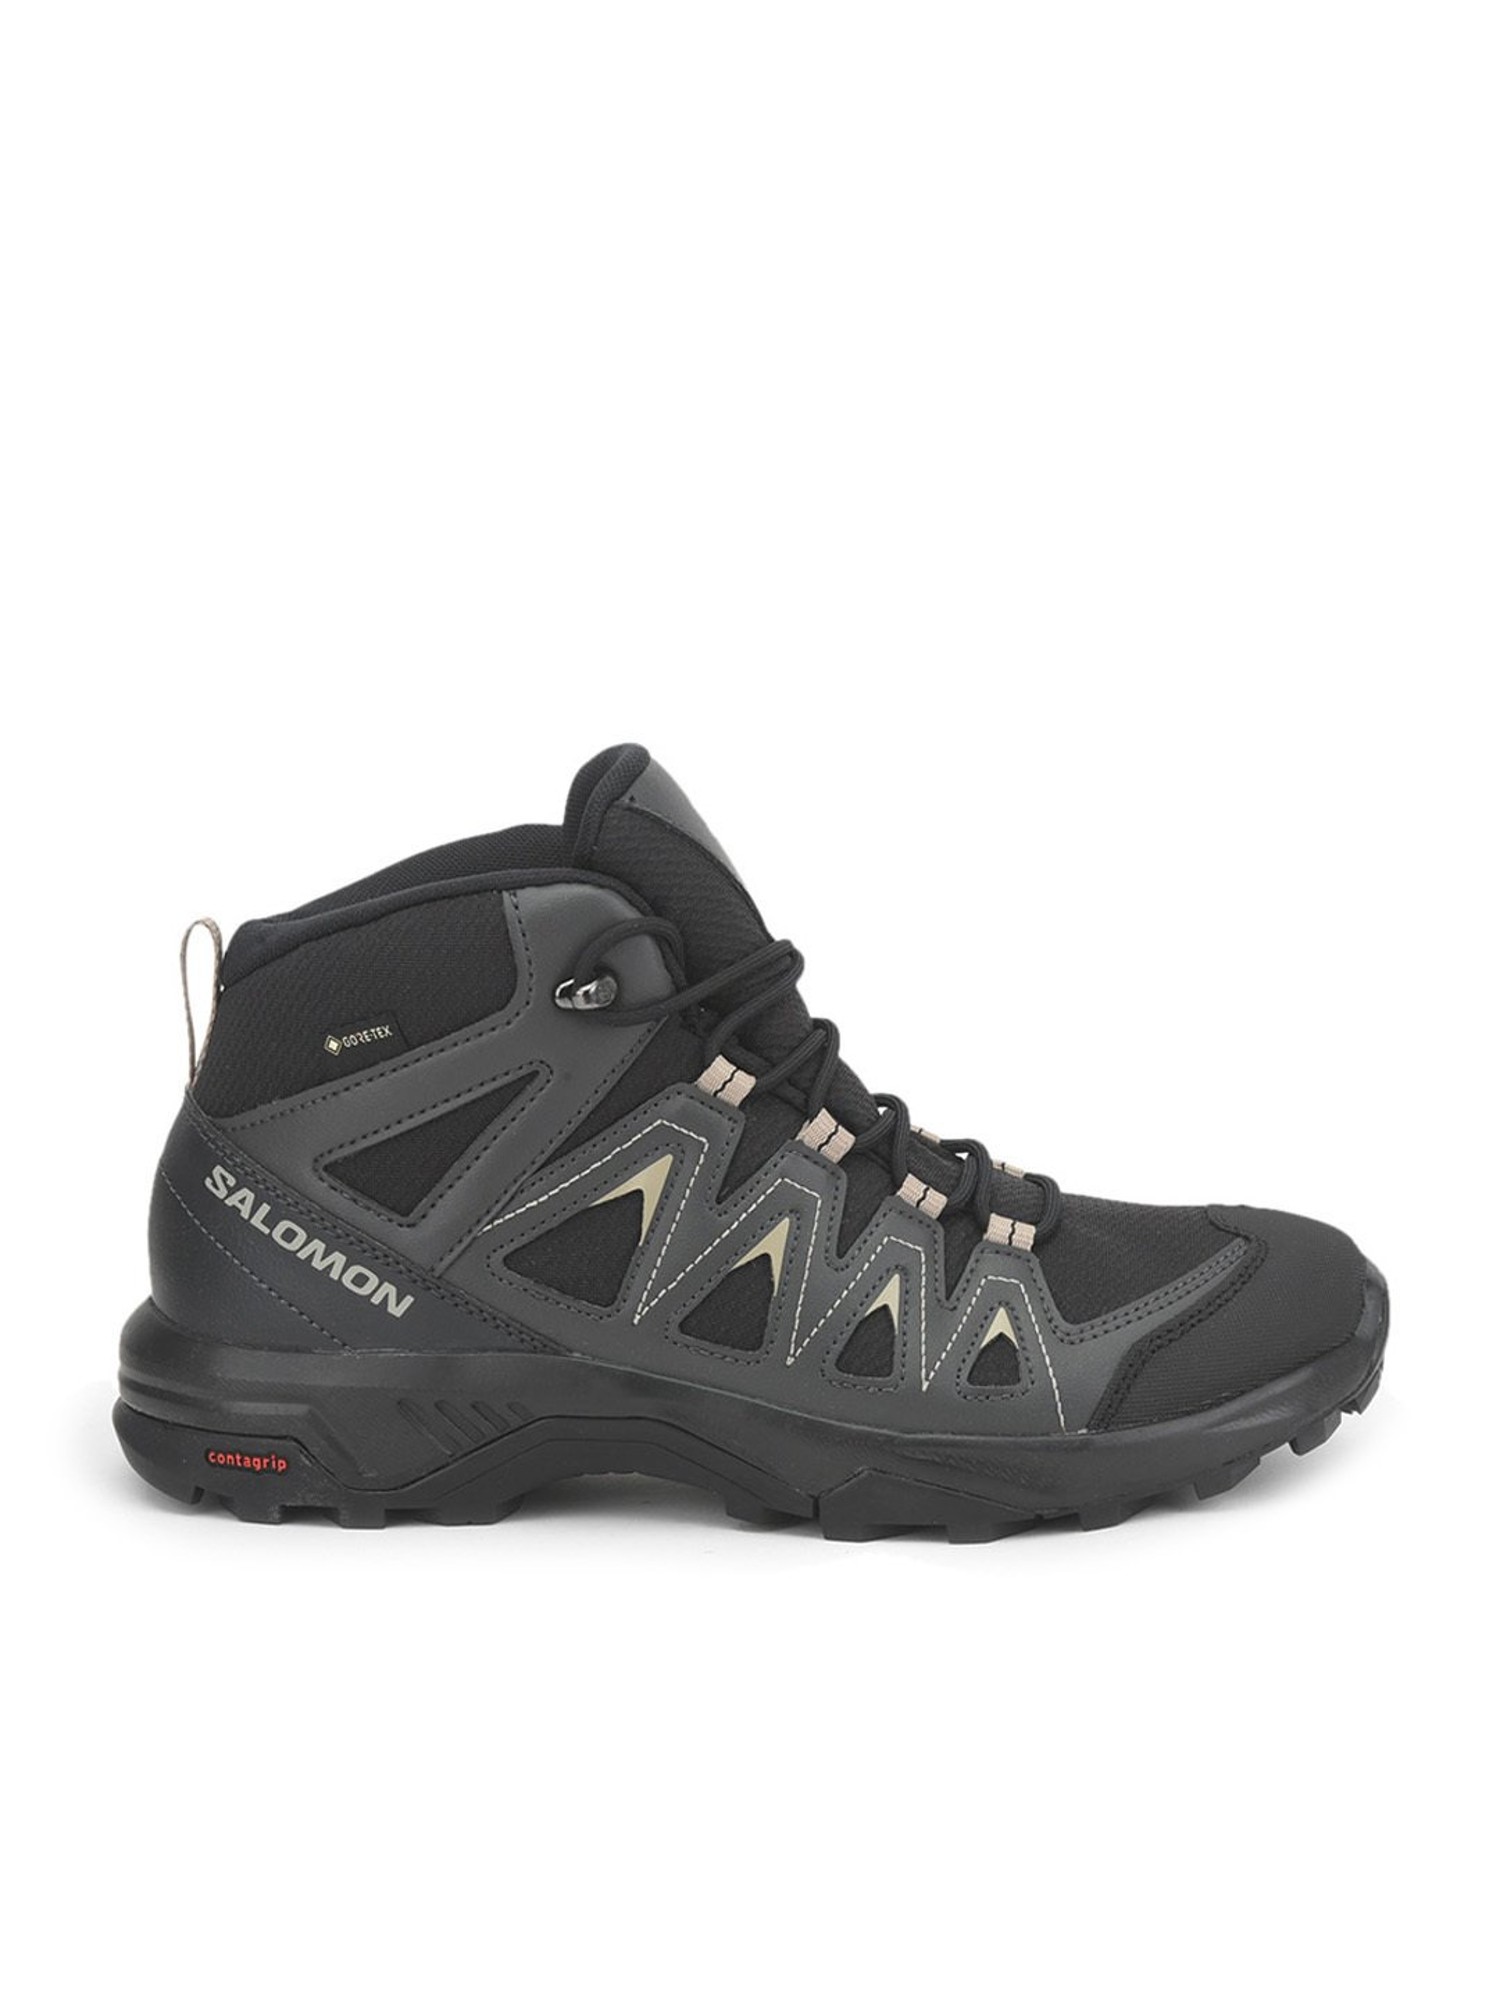 Amazoncom  Salomon X Crest Hiking Shoes for Men MagnetBlackMonument  95  Hiking Shoes